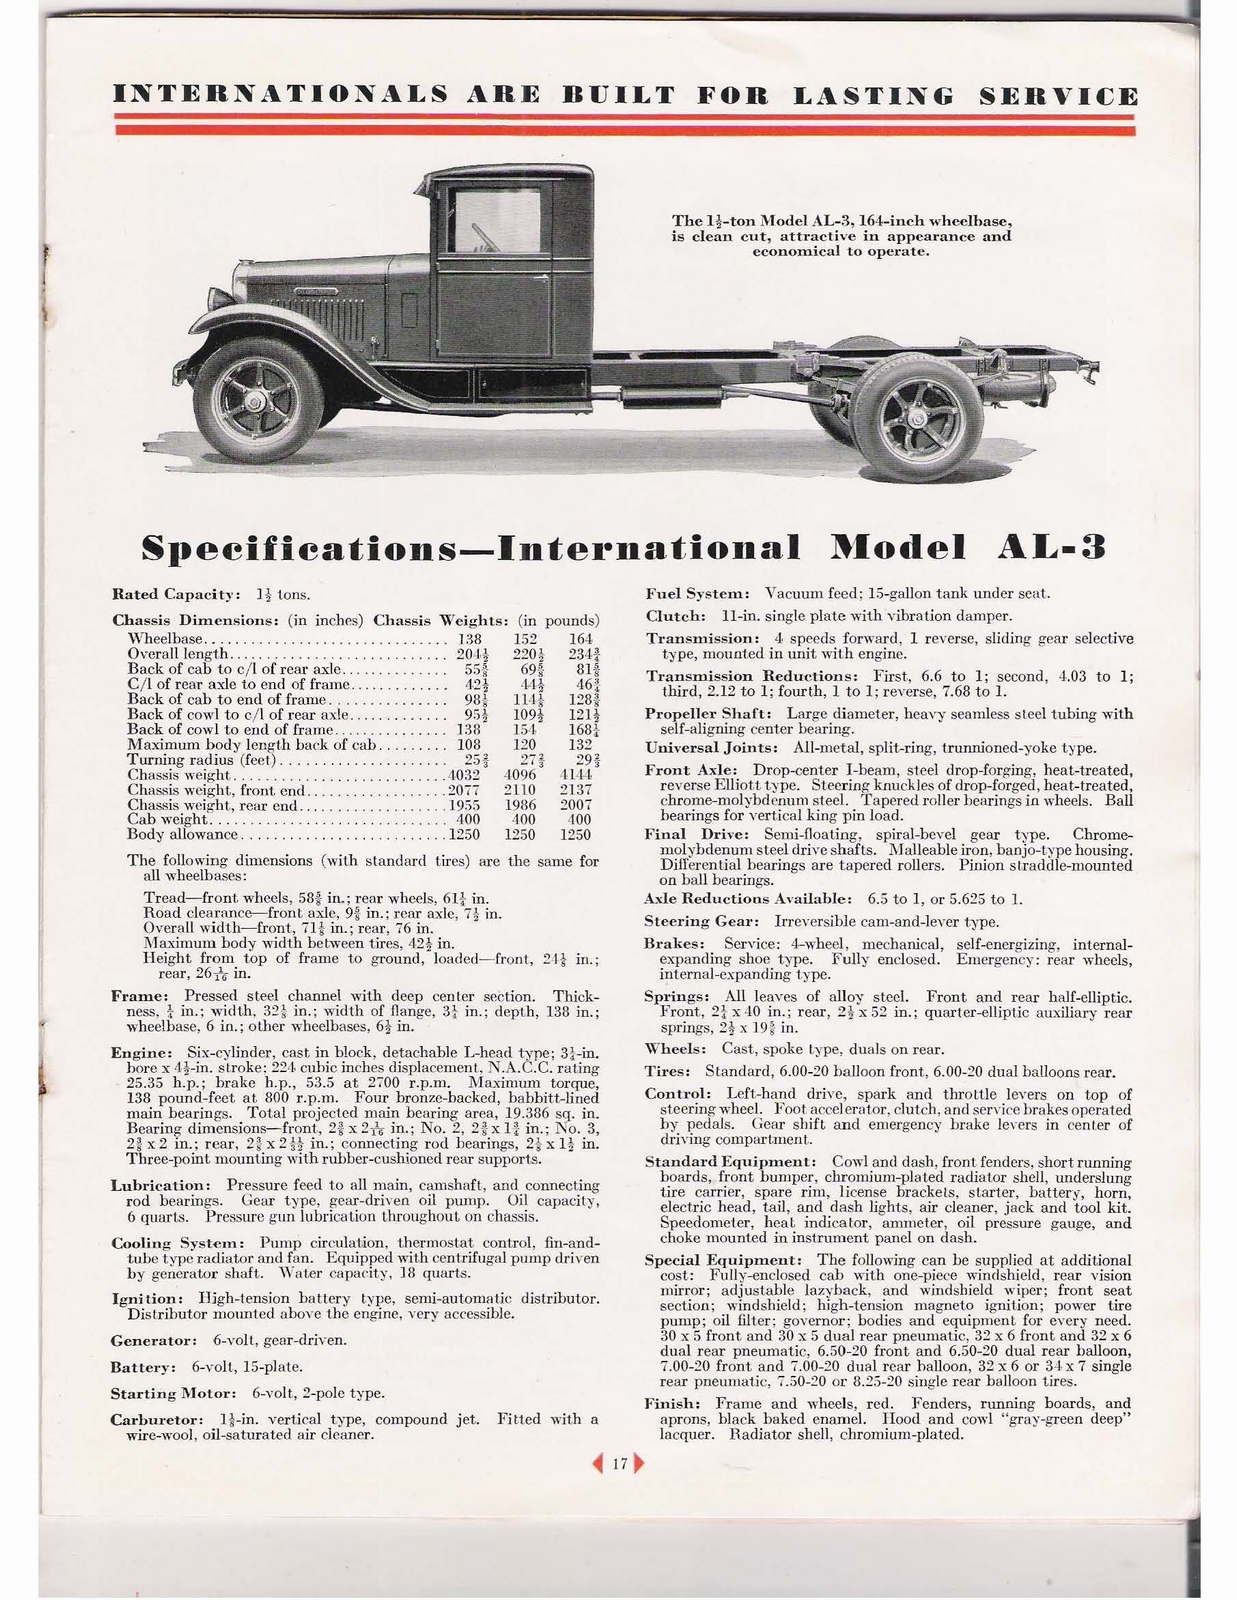 n_1931 International Spec Sheets-13.jpg